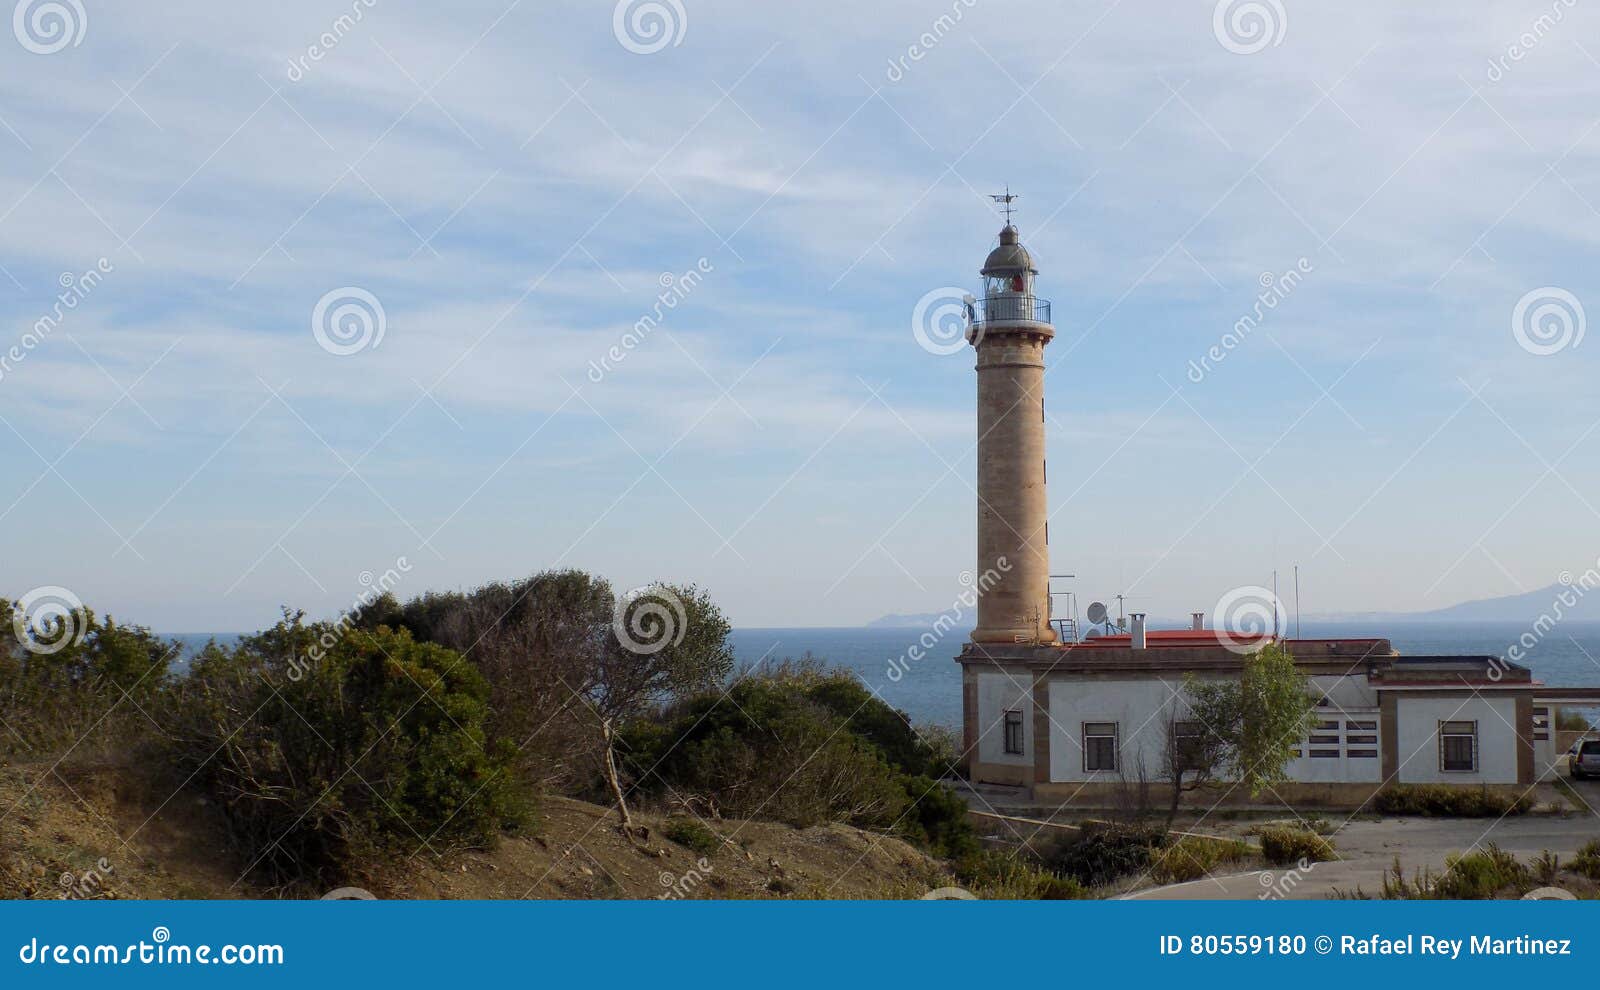 lighthouse-punta carnero-algeciras-spain